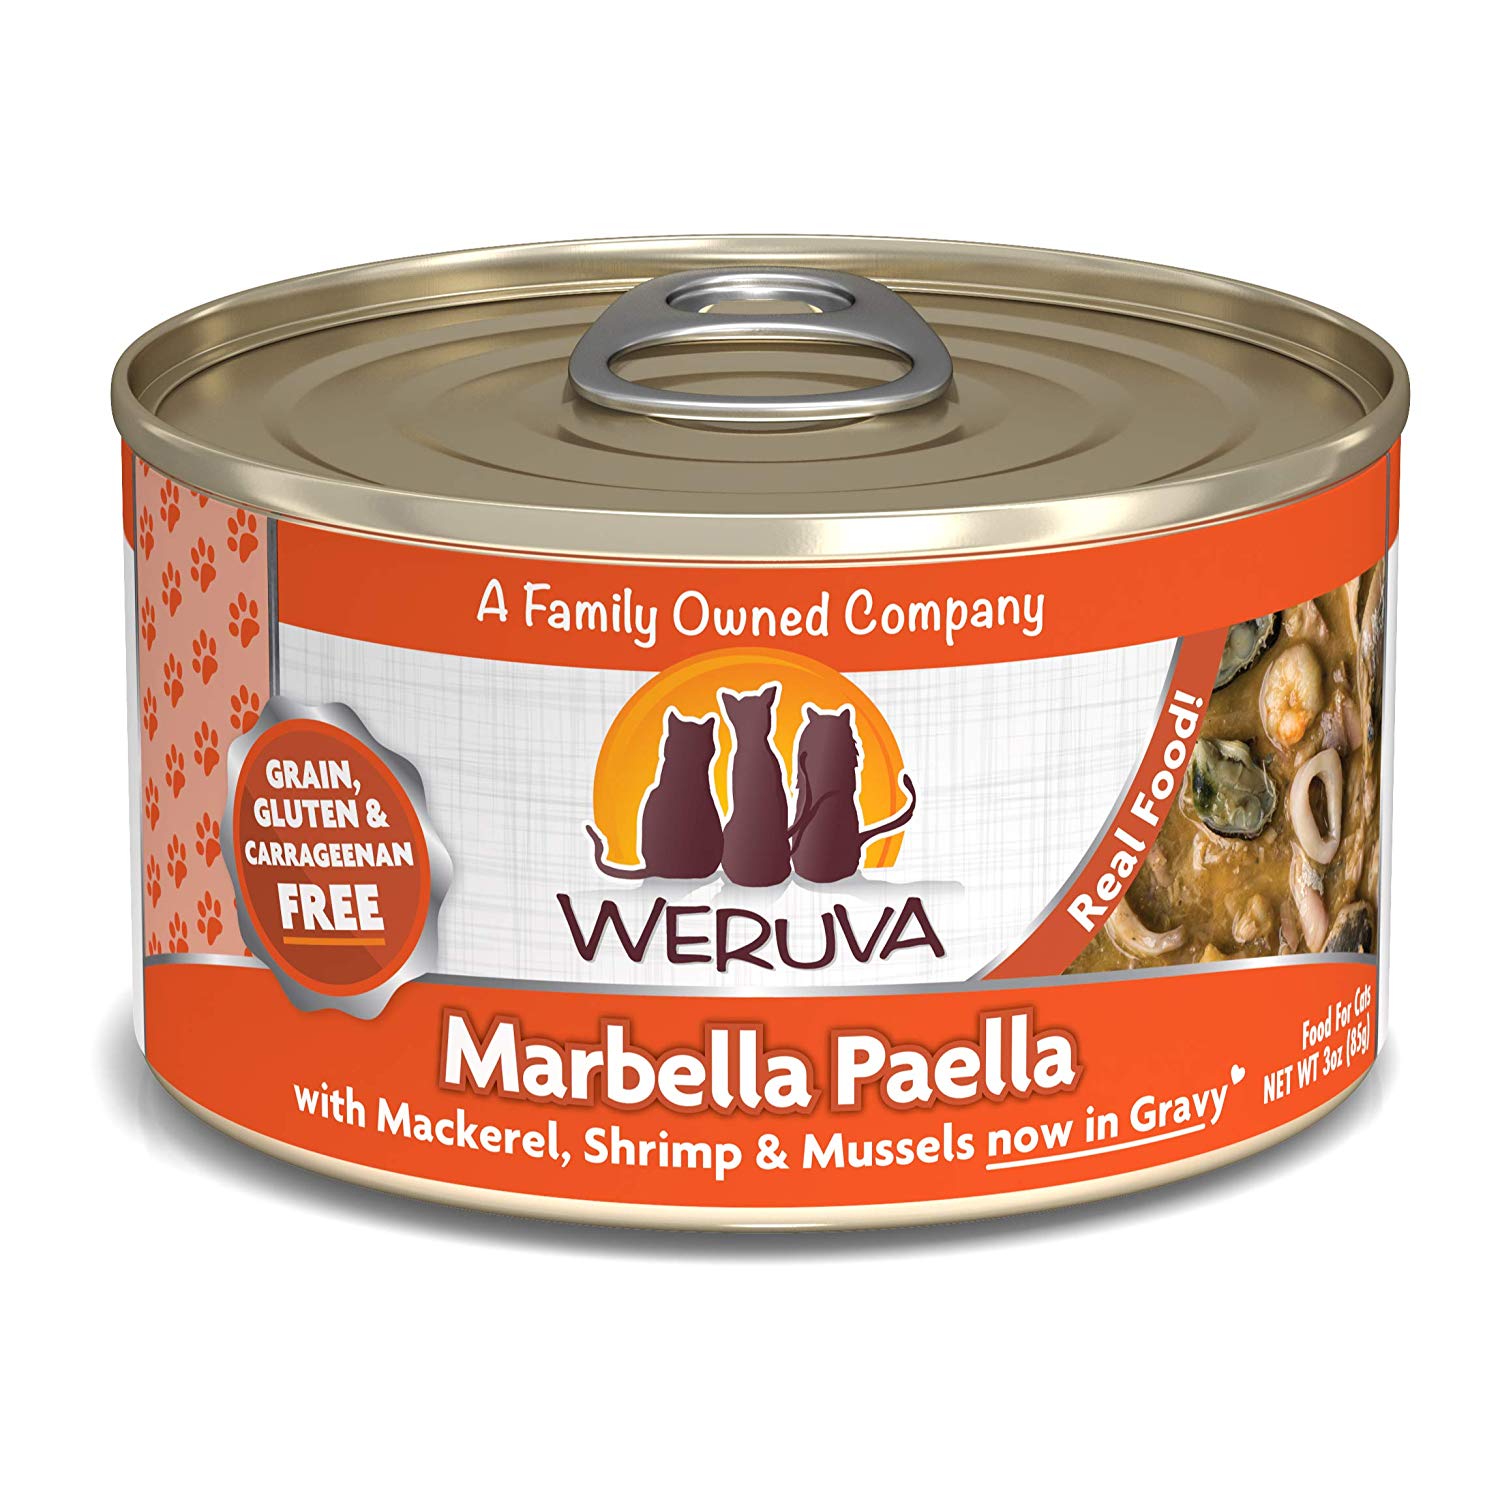 唯美味主食貓罐-西班牙海鮮飯
WERUVA-Marbella Paella With Mackerel and Shrimp